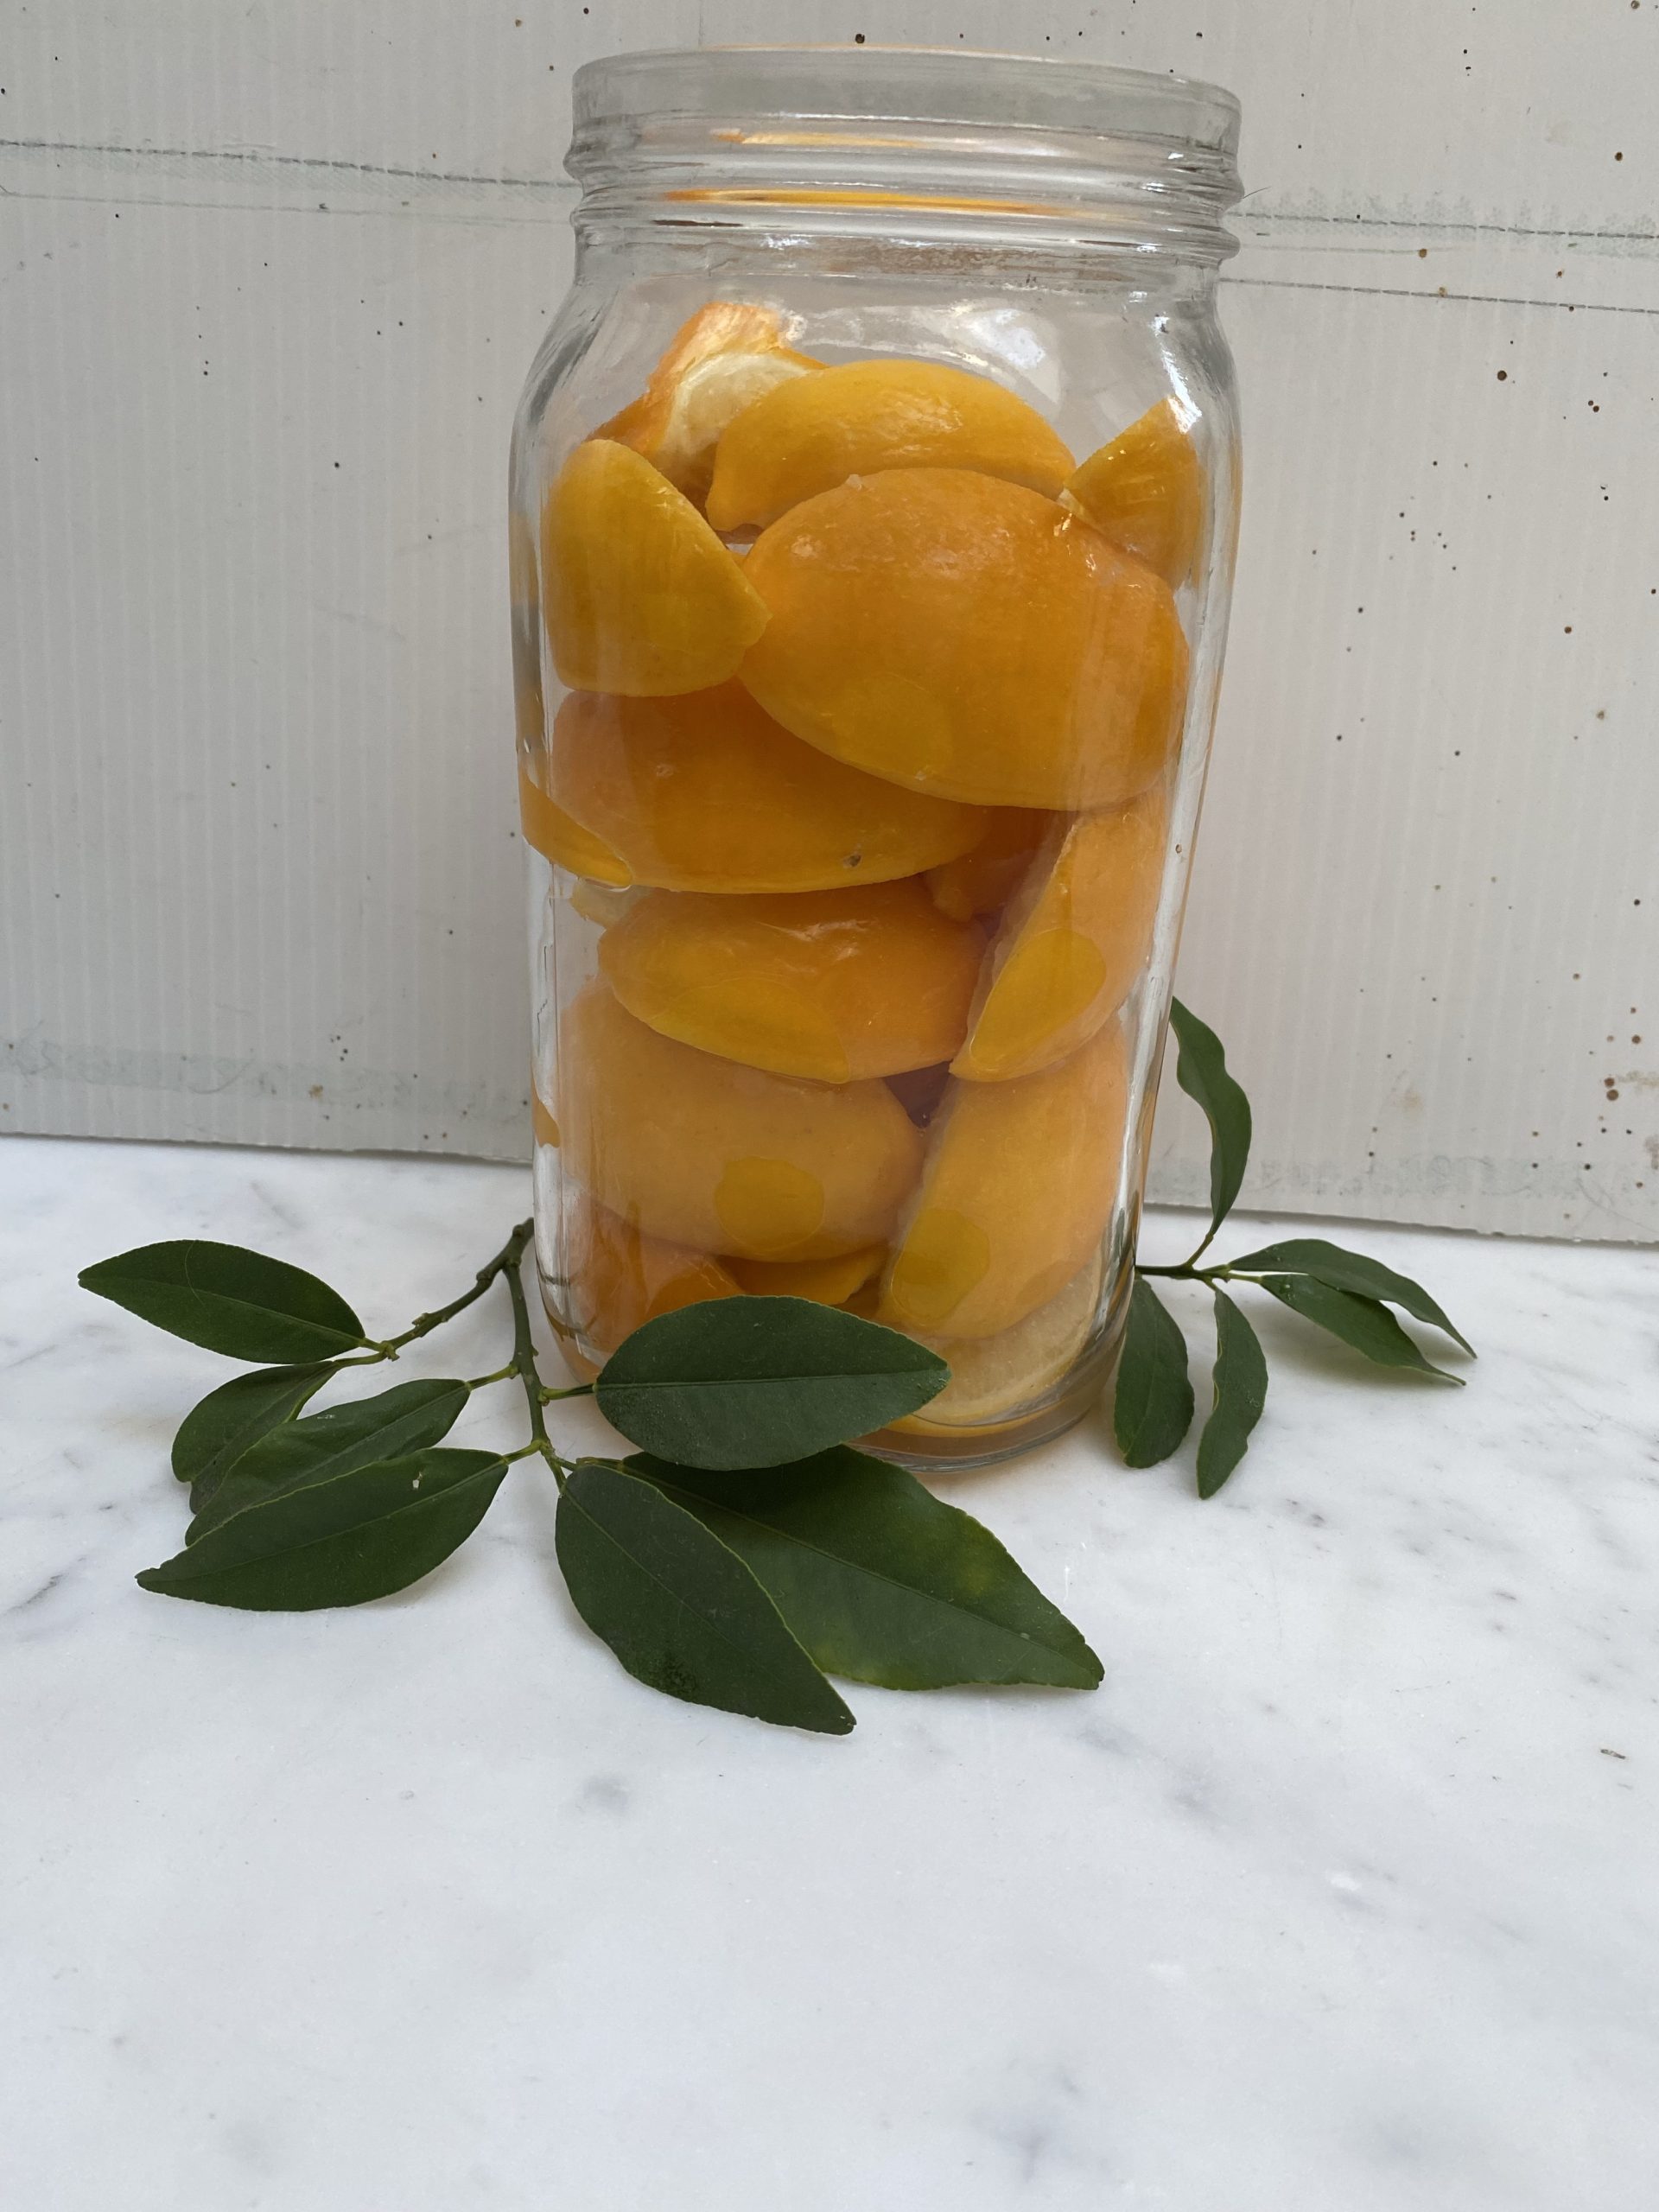 preserved lemon recipe, lemons, organic lemons, lemon quarters, fido jars, fido canning jars